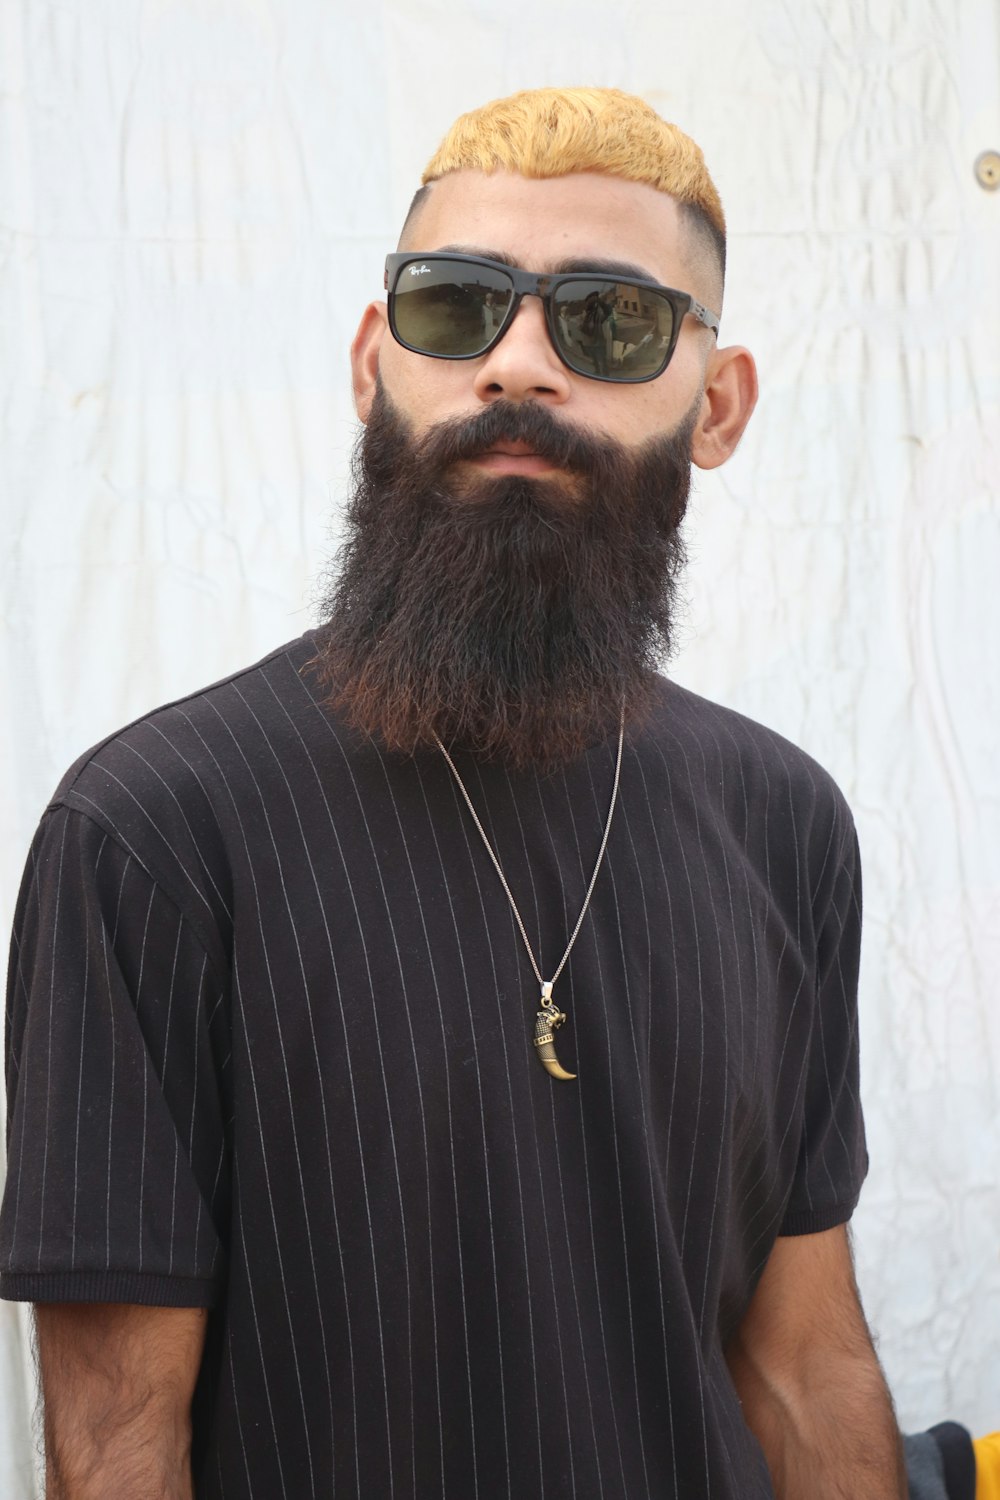 a man with a long beard wearing sunglasses